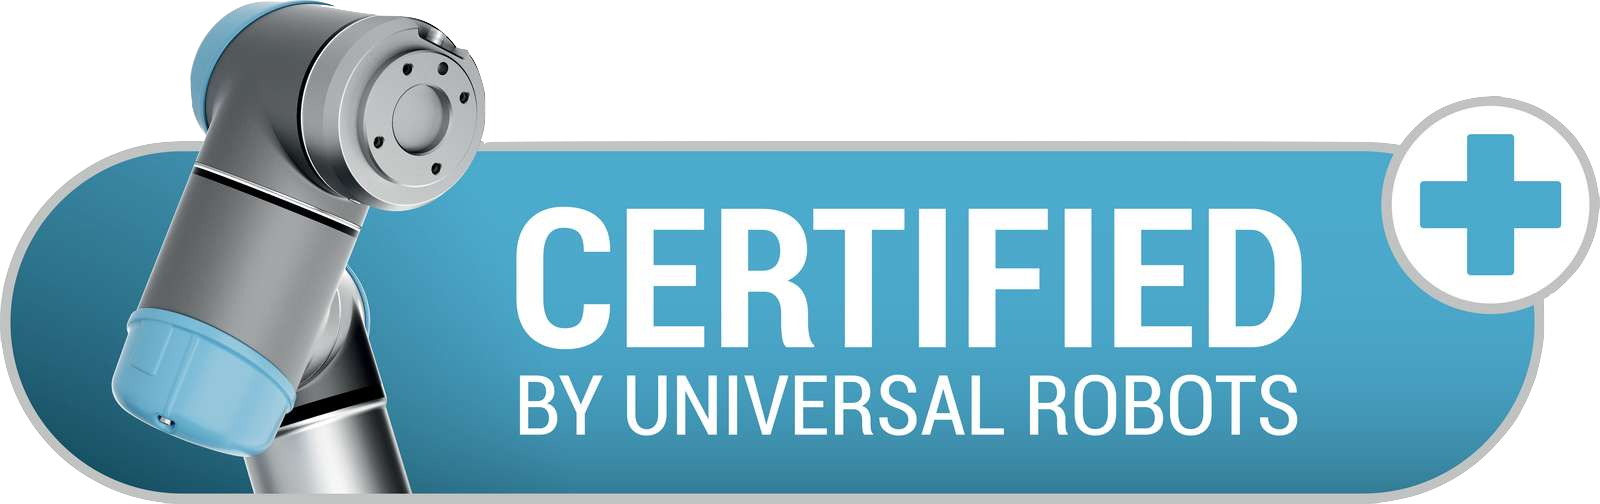 Universal Robots Certified